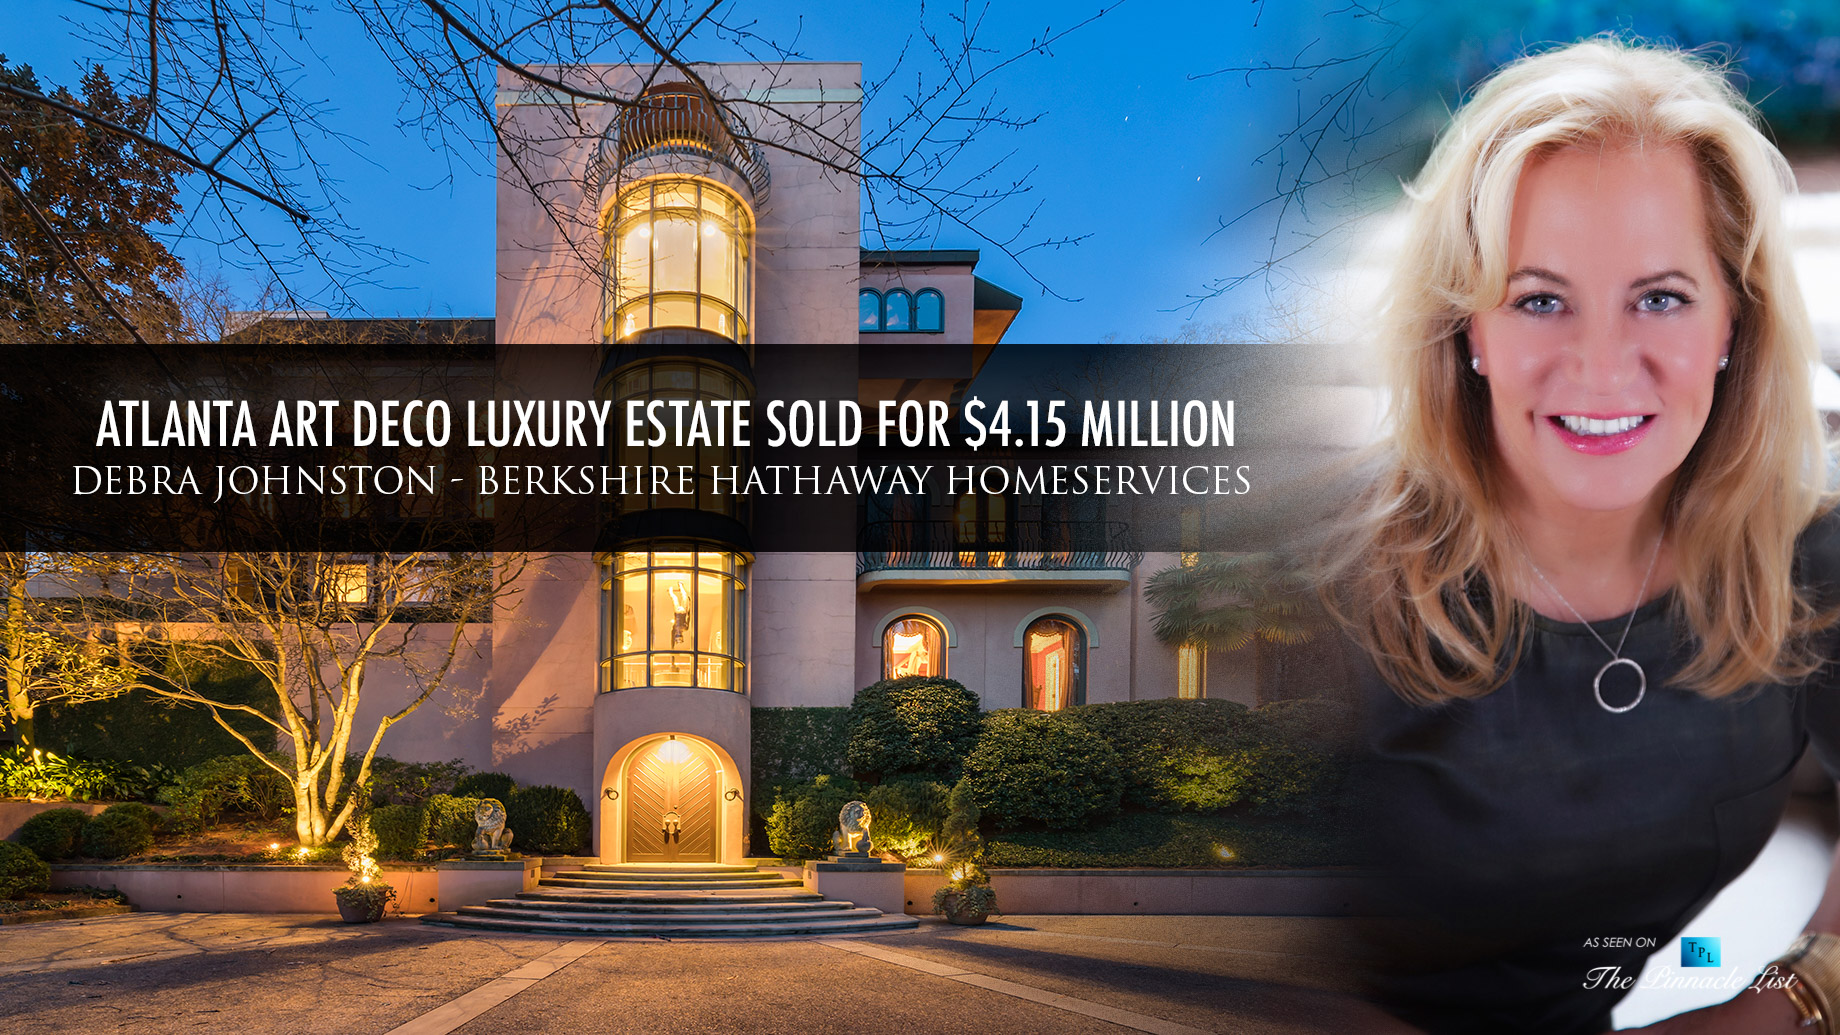 Atlanta Art Deco Luxury Estate Sold for $4.15 Million by Debra Johnston